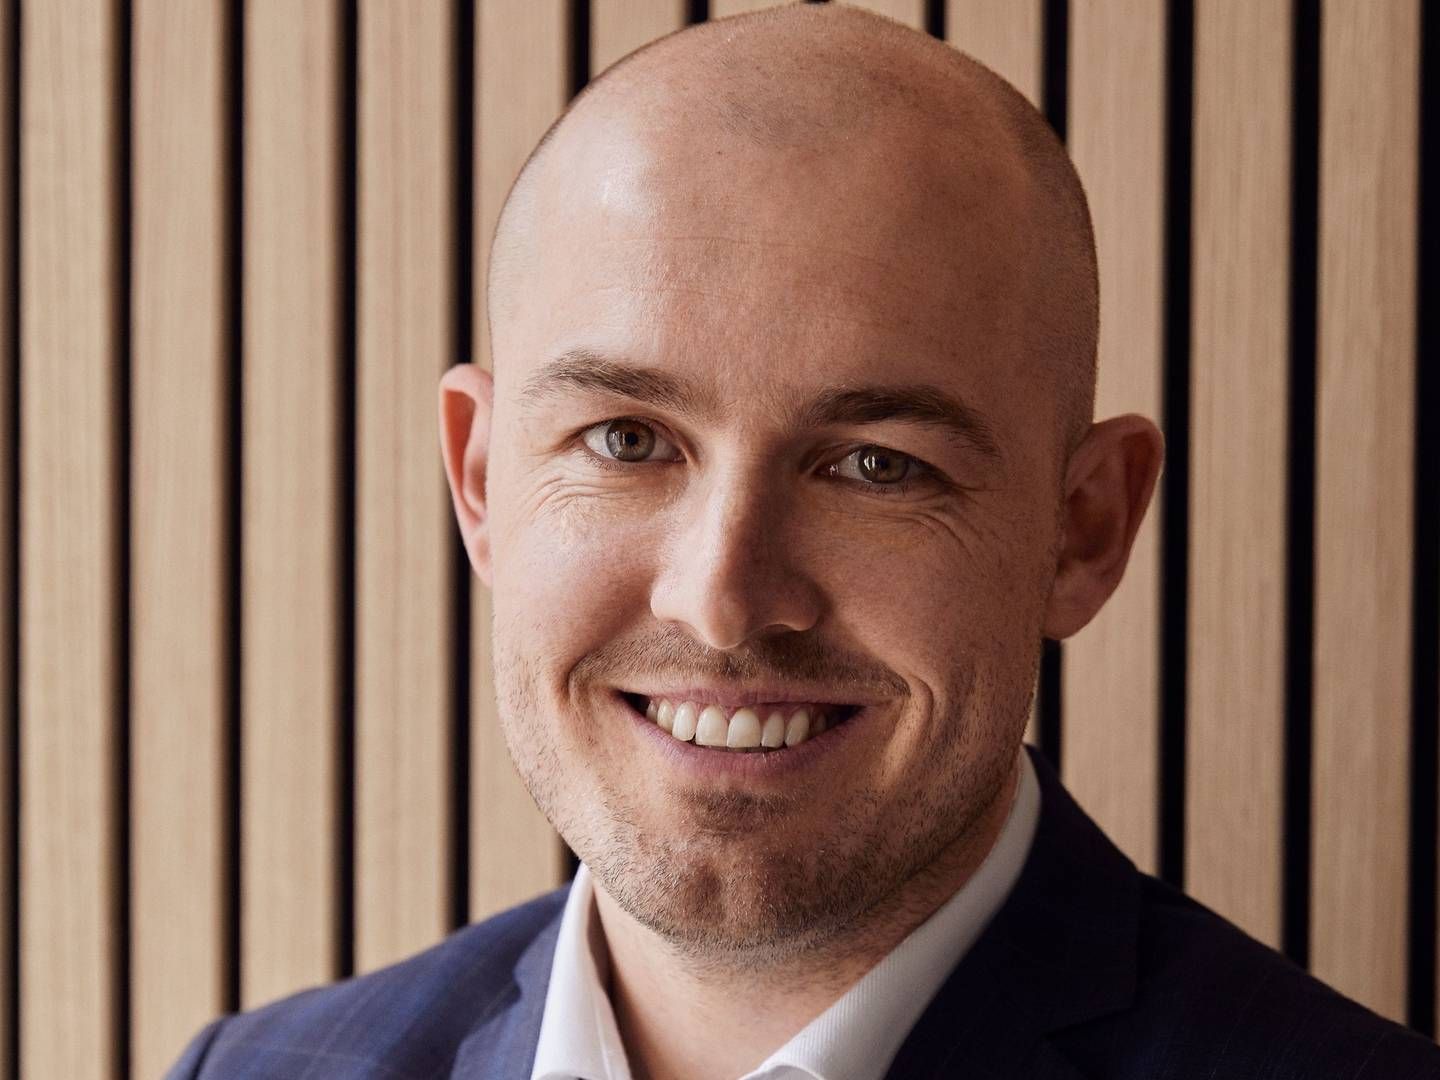 Storebrand Asset Management has hired Christian Bache Vognbjerg as Director for institutional clients in Denmark | Photo: PR / Storebrand